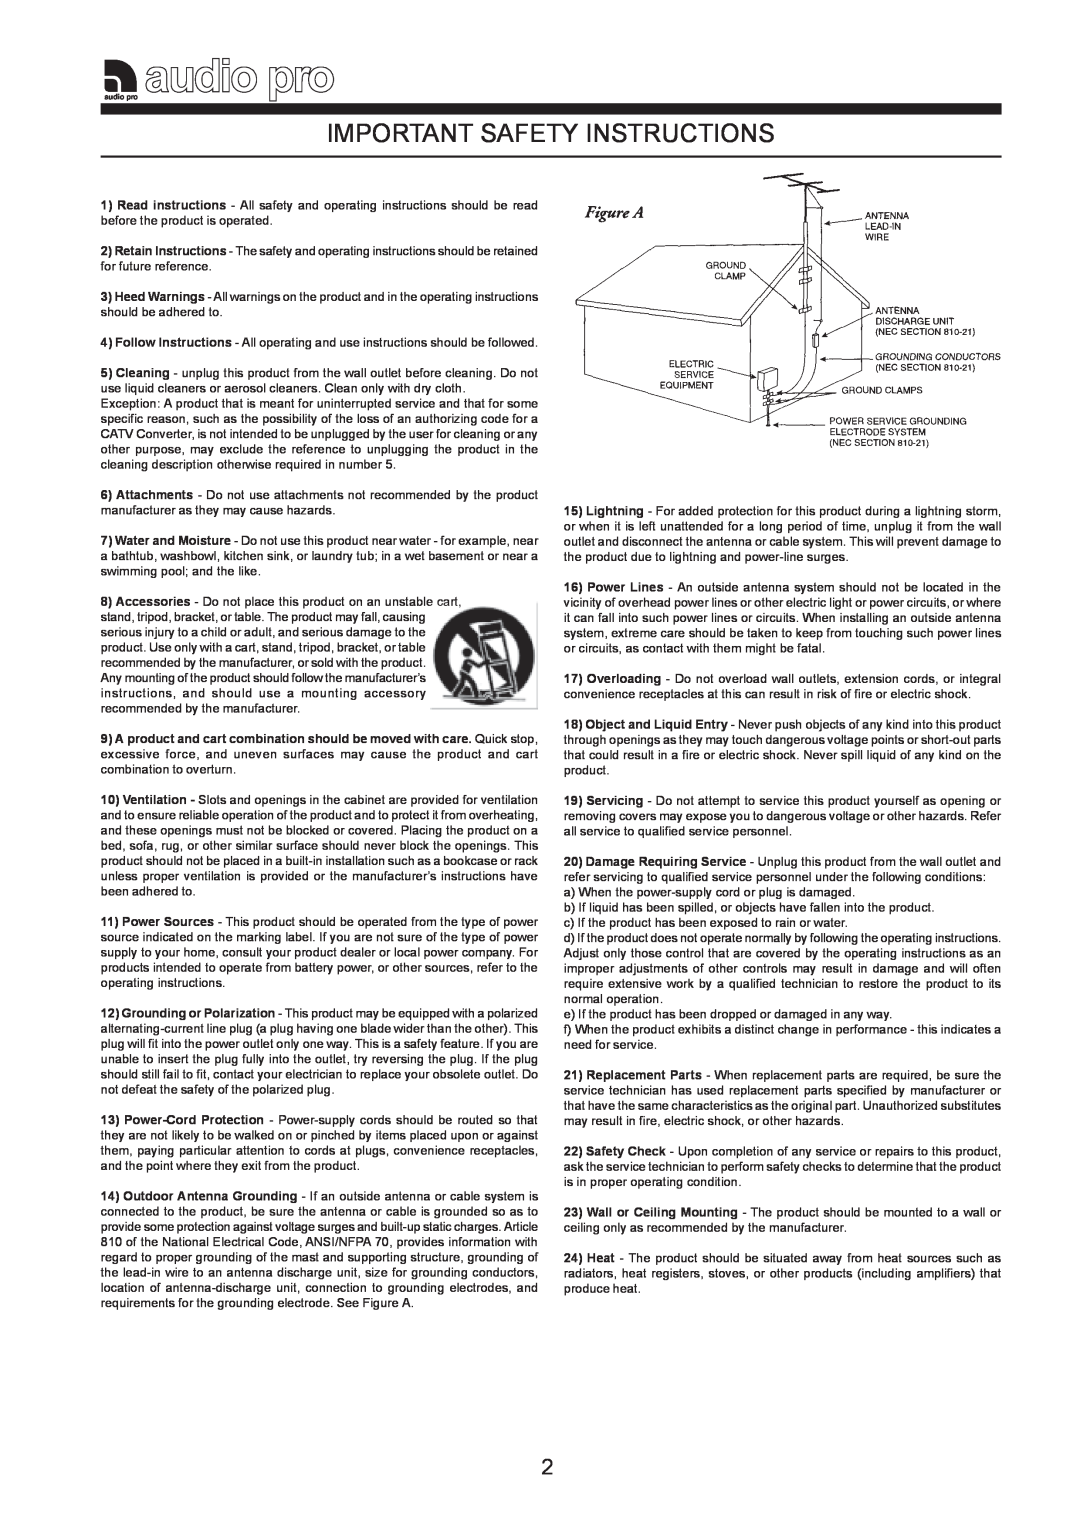 Audio Pro 115V 0502 instruction manual Important Safety Instructions 